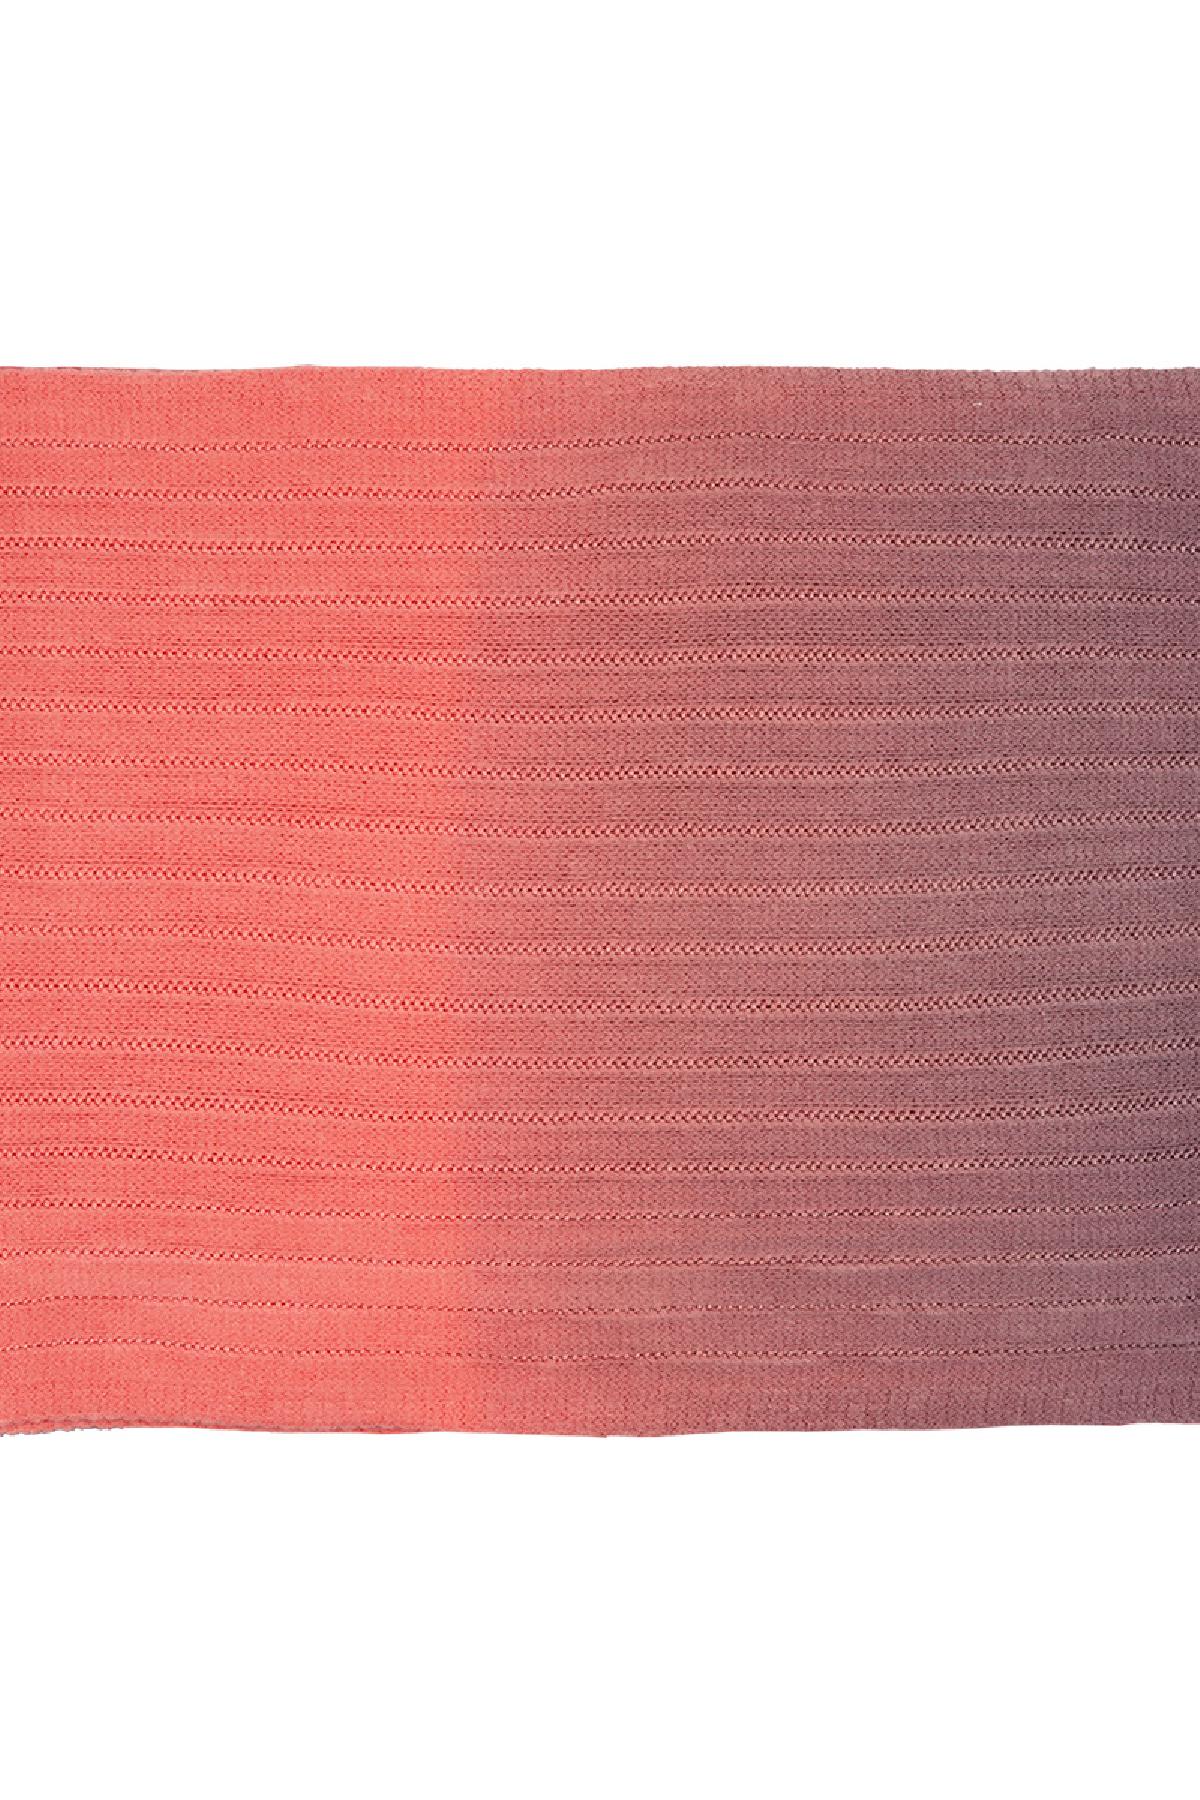 Écharpe tie-dye Orange Acrylique h5 Image3